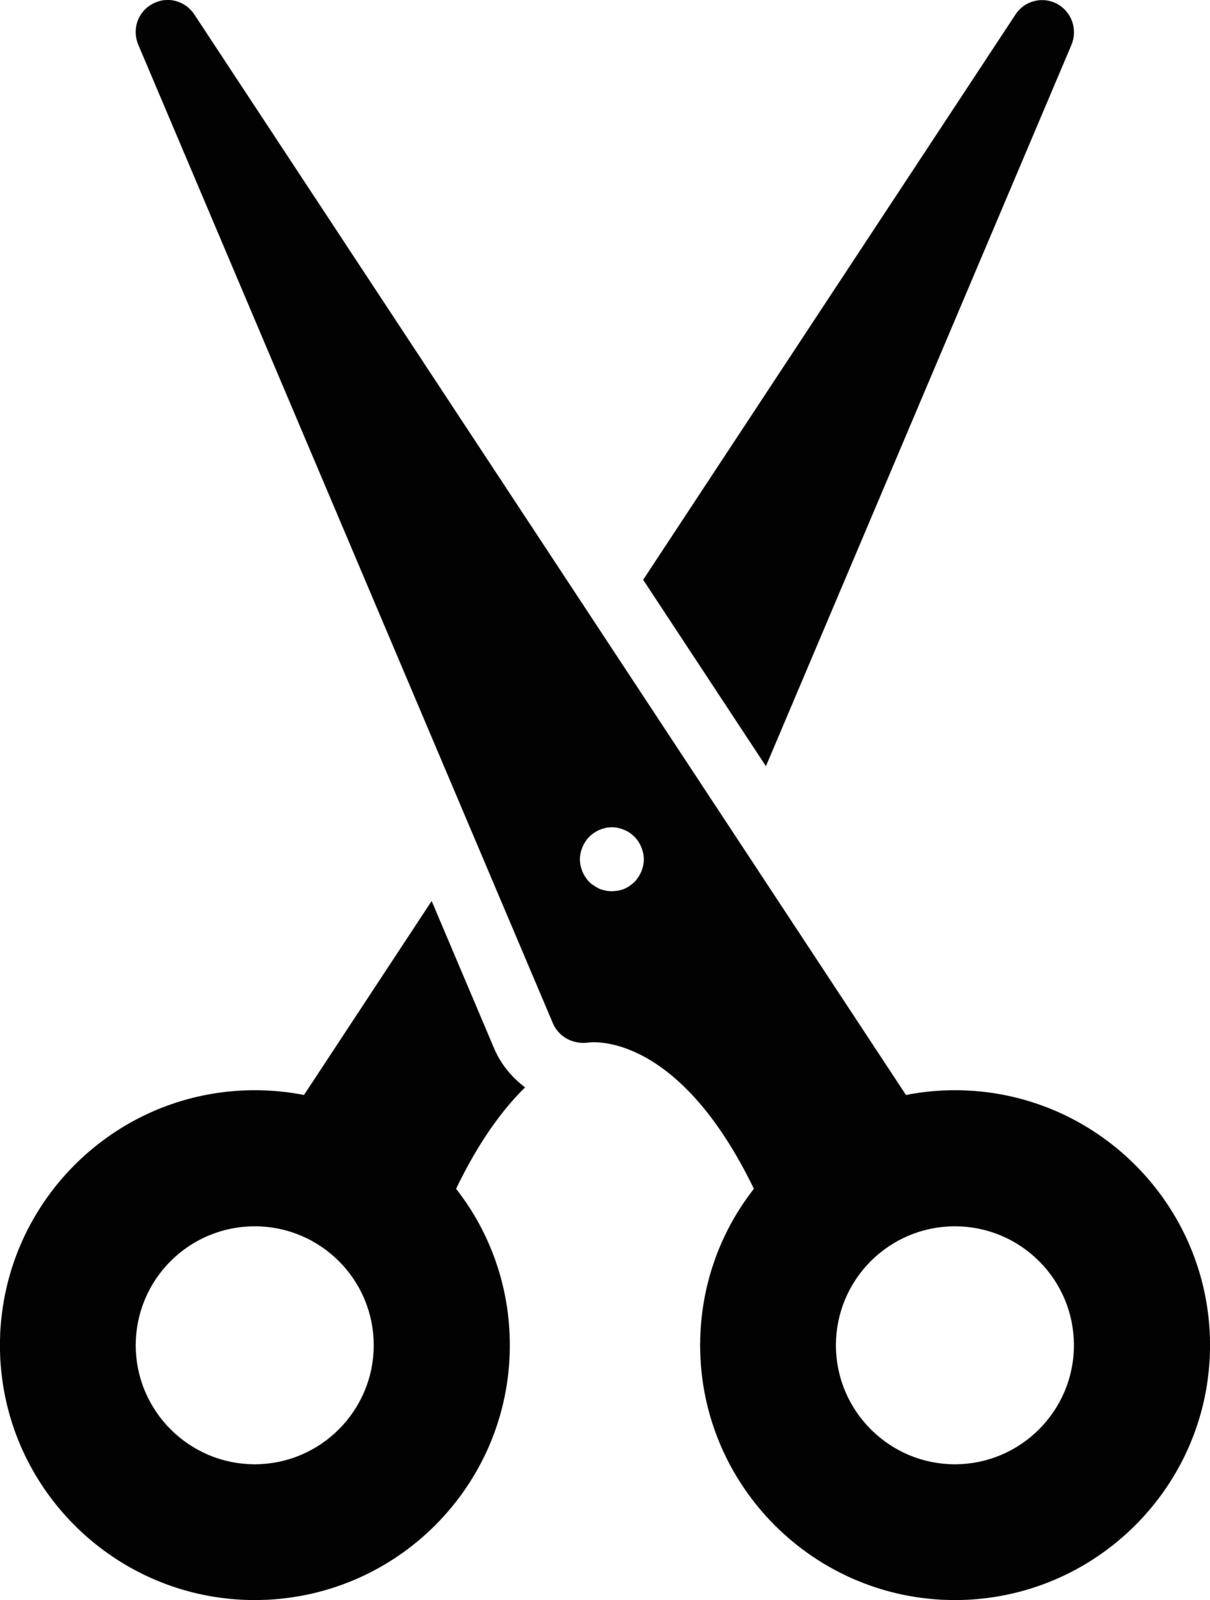 scissor Vector illustration on a transparent background. Premium quality symbols. Glyphs vector icon for concept and graphic design.